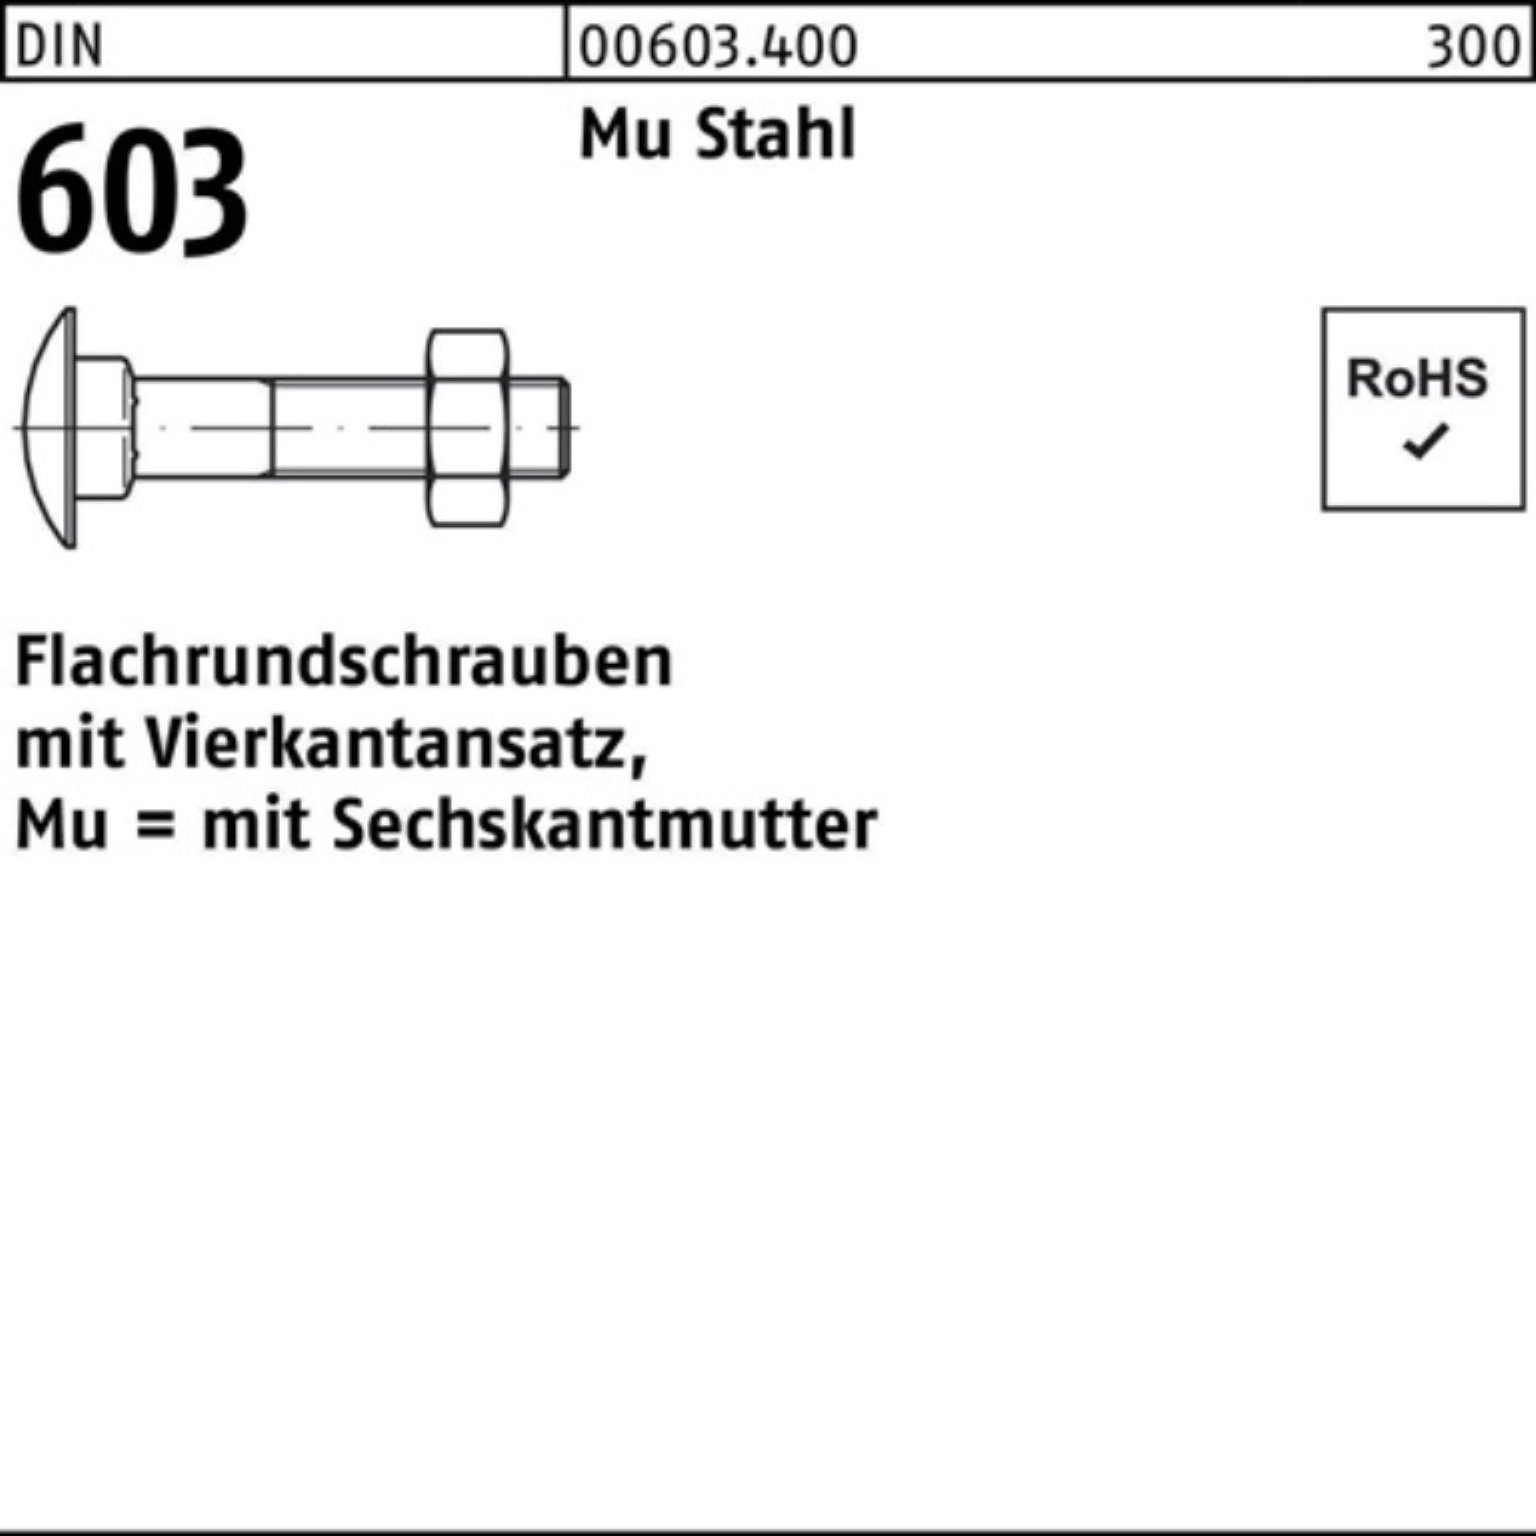 Reyher Schraube 100er Vierkantansatz/6-ktmutter Pack DIN 603 M16x130 Flachrundschraube